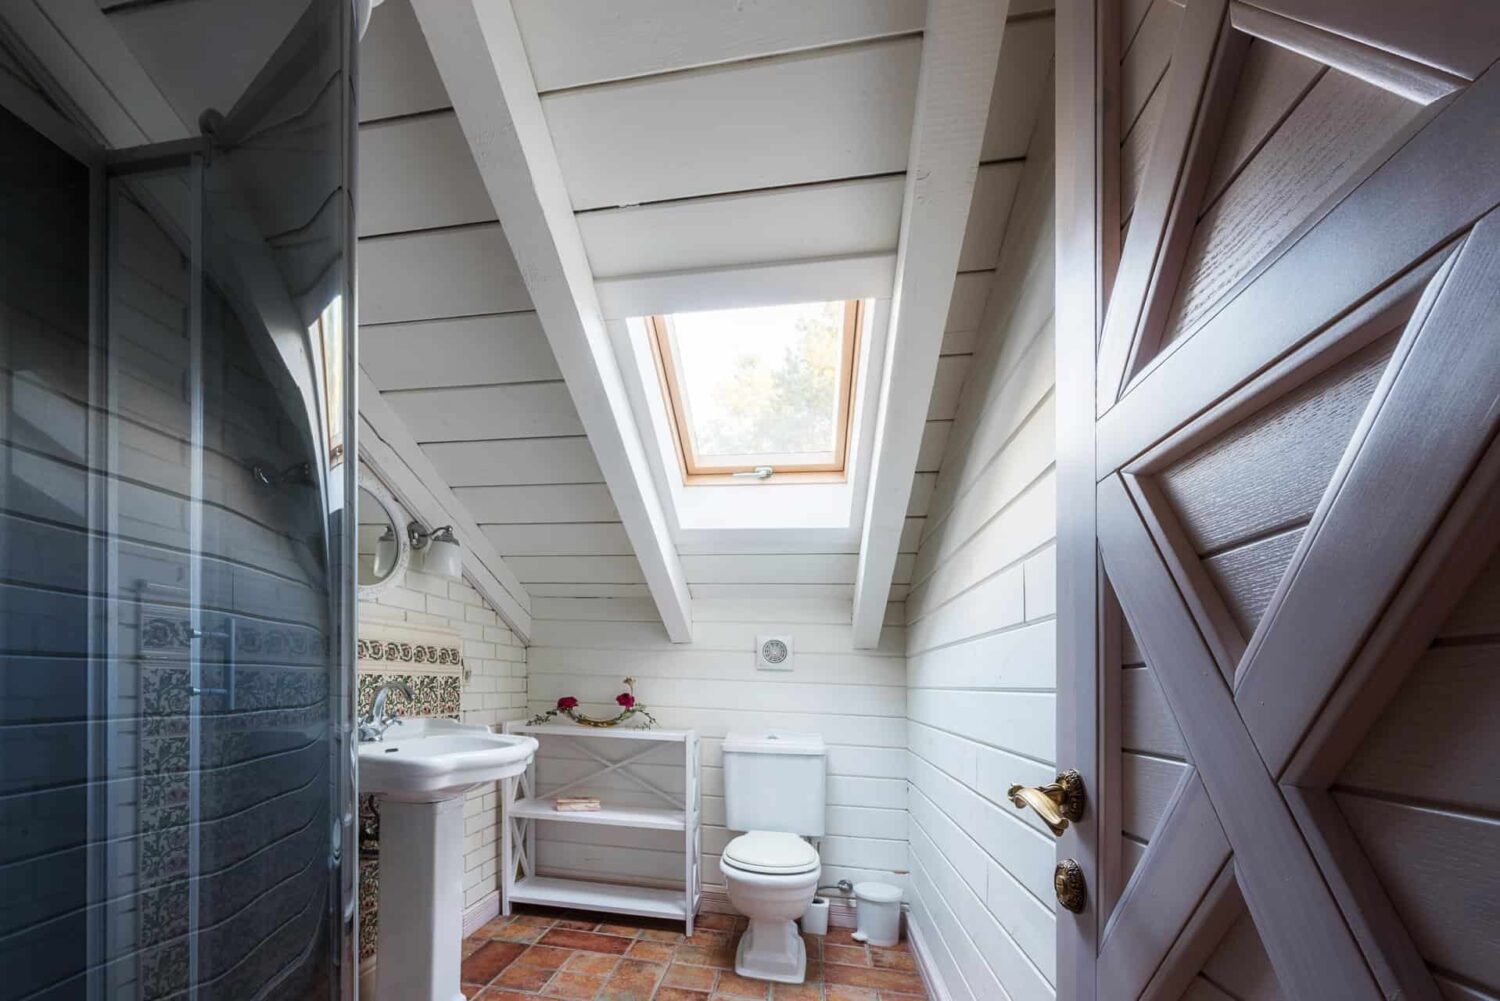 interior-of-bathroom-in-modern-cottage-house-2022-12-16-19-40-45-utc-min (1)